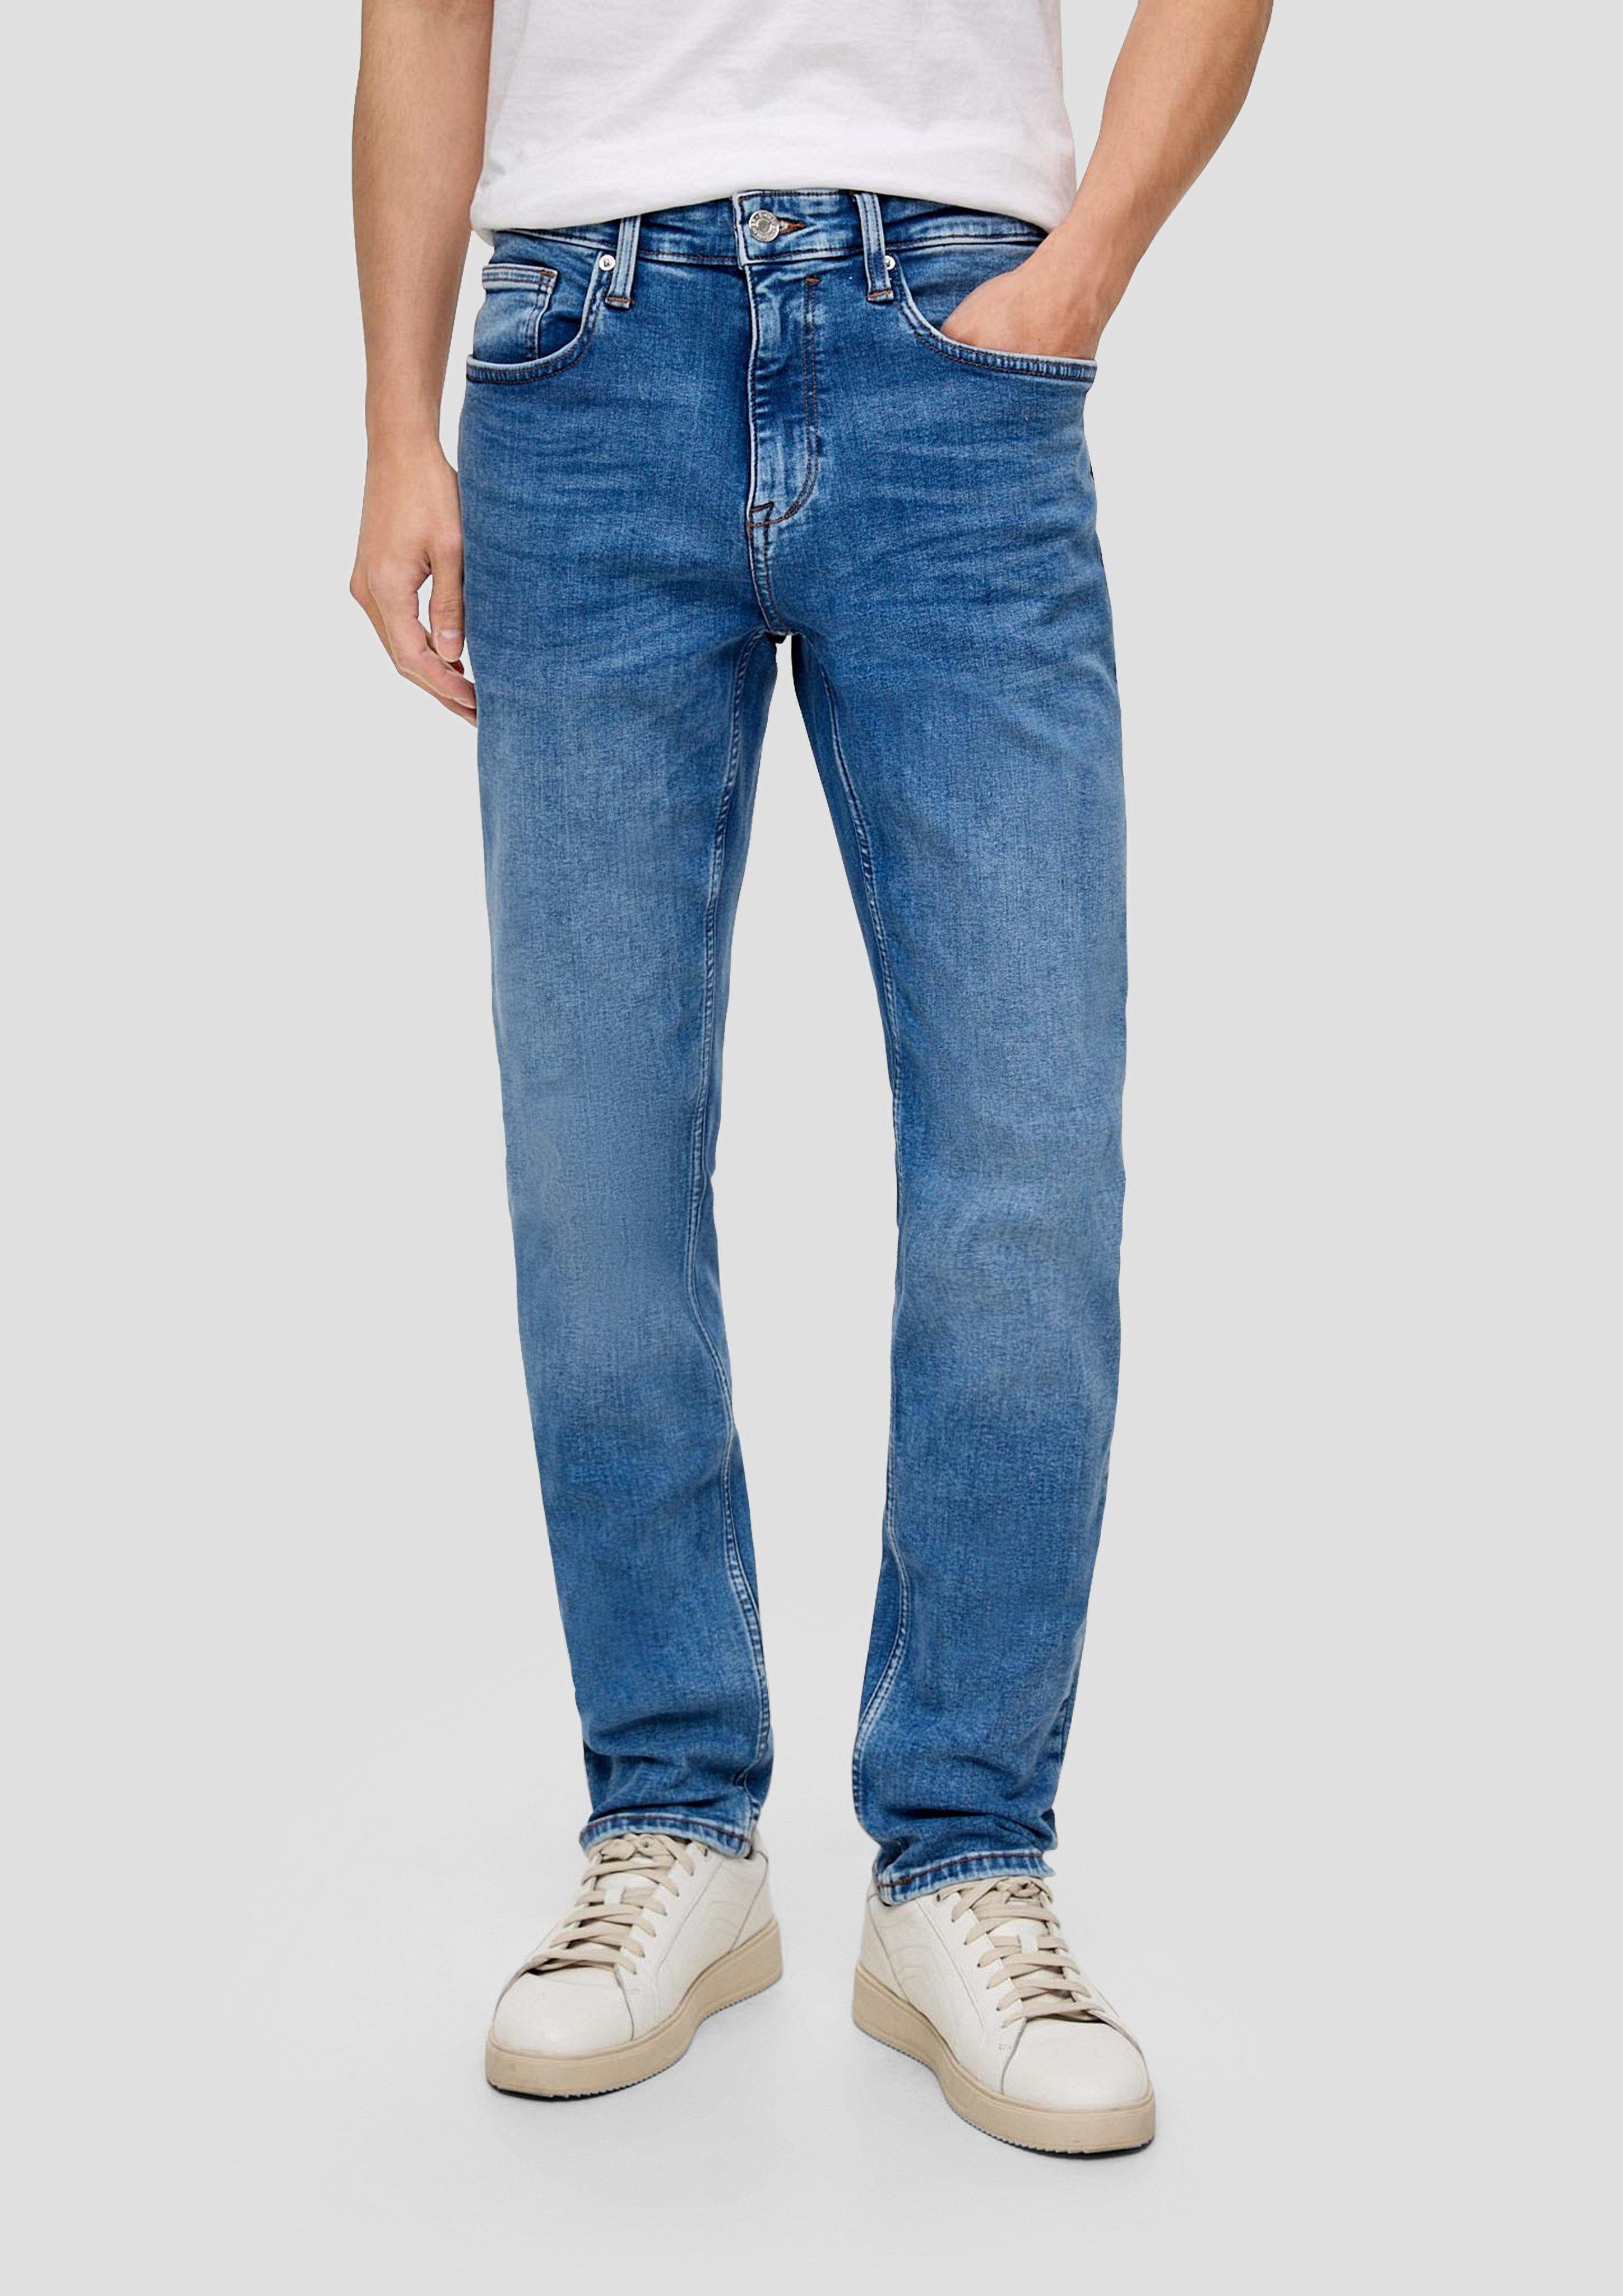 s.Oliver Stoffhose Jeans Nelio / Slim Fit / Mid Rise / Slim Leg Waschung, Label-Patch, Kontrastnähte blau